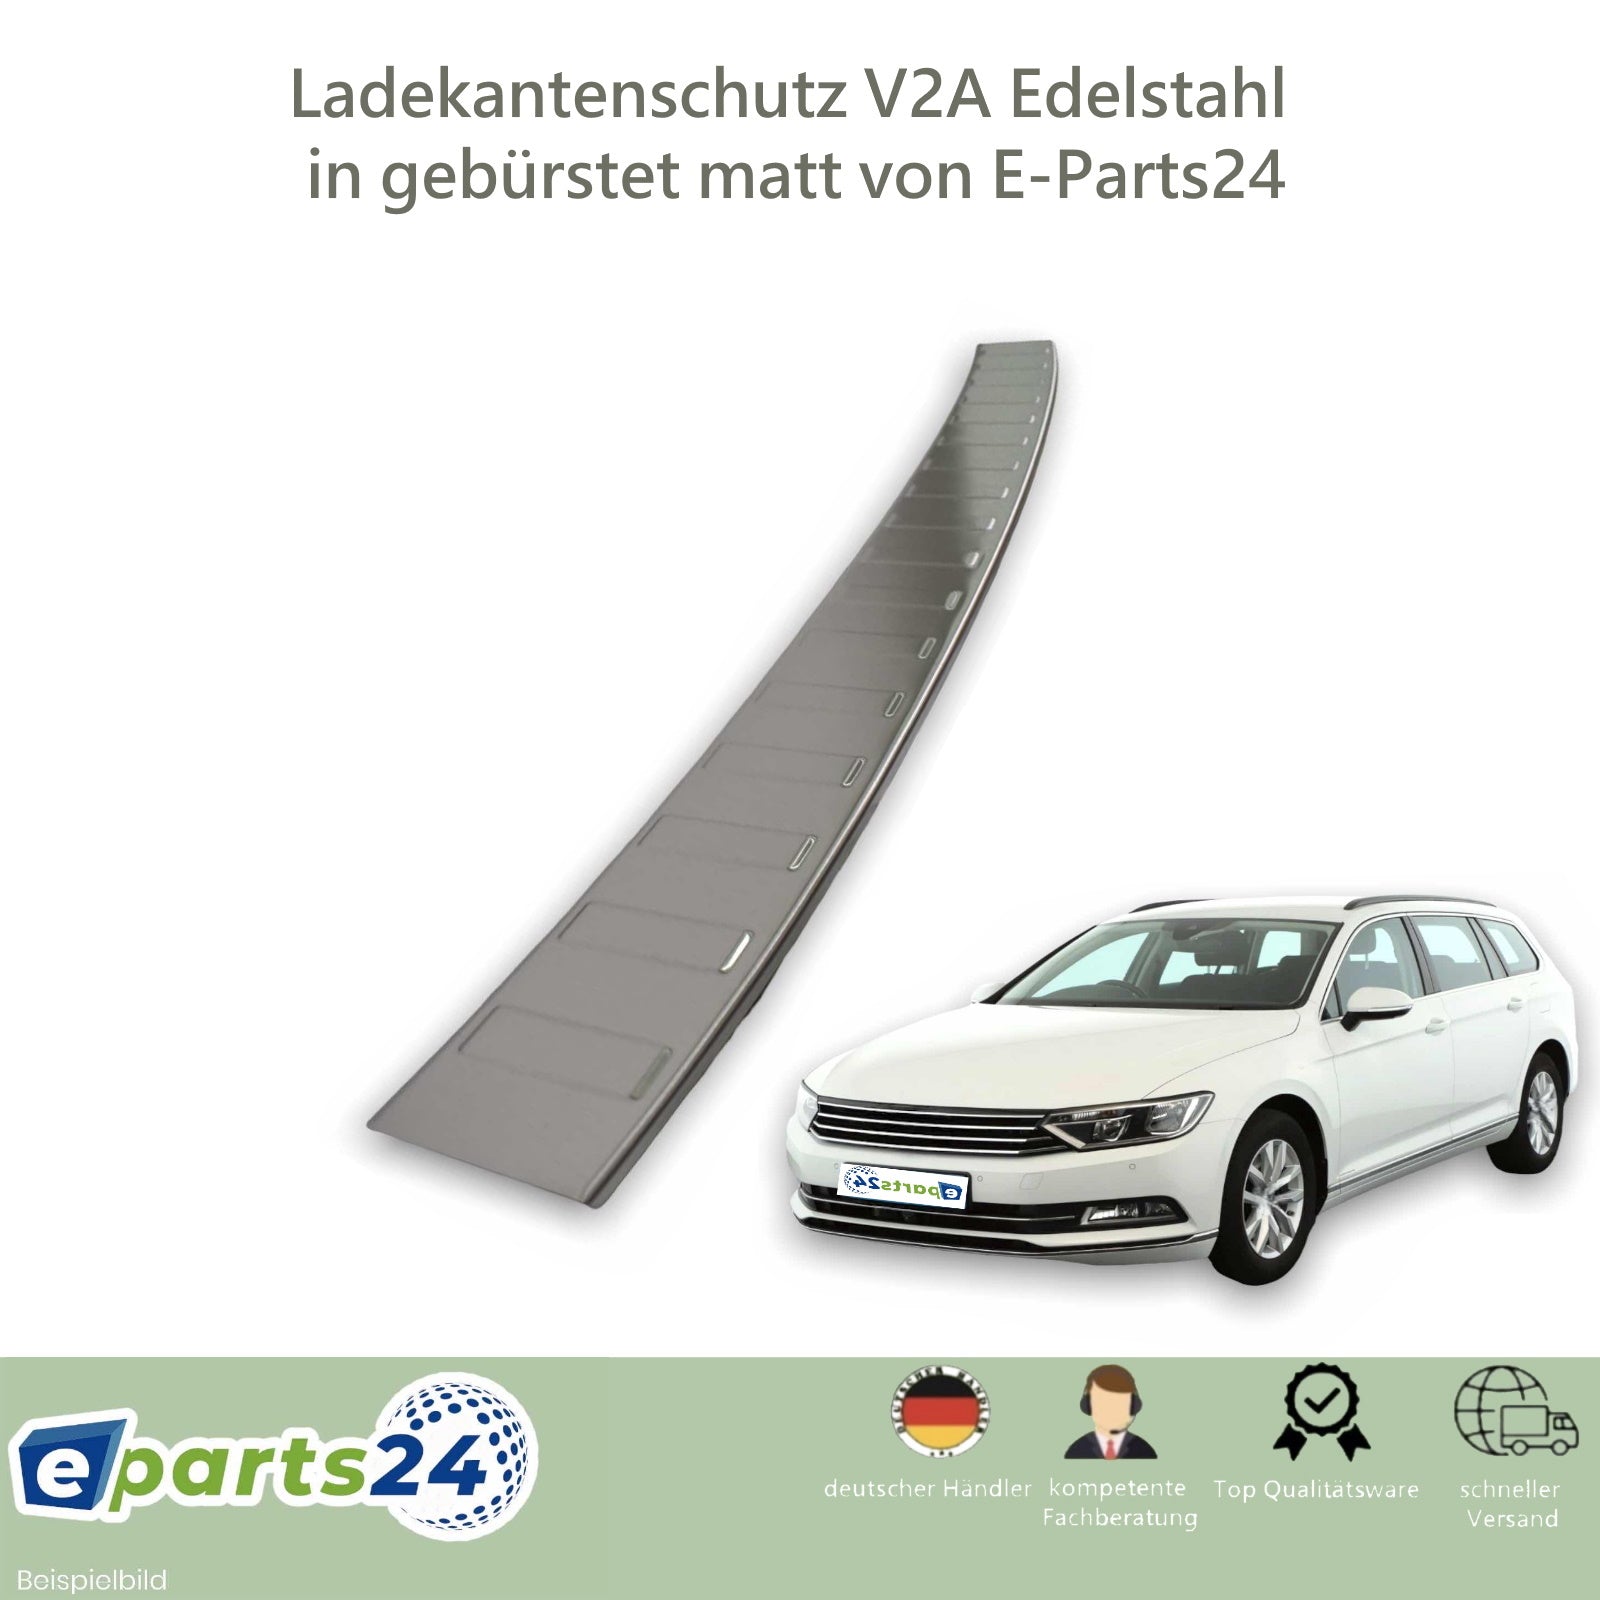 Ladekantenschutz für VW Kombi E-Parts24 Edelstahl 2014-2019 – Variant Passat 3G B8